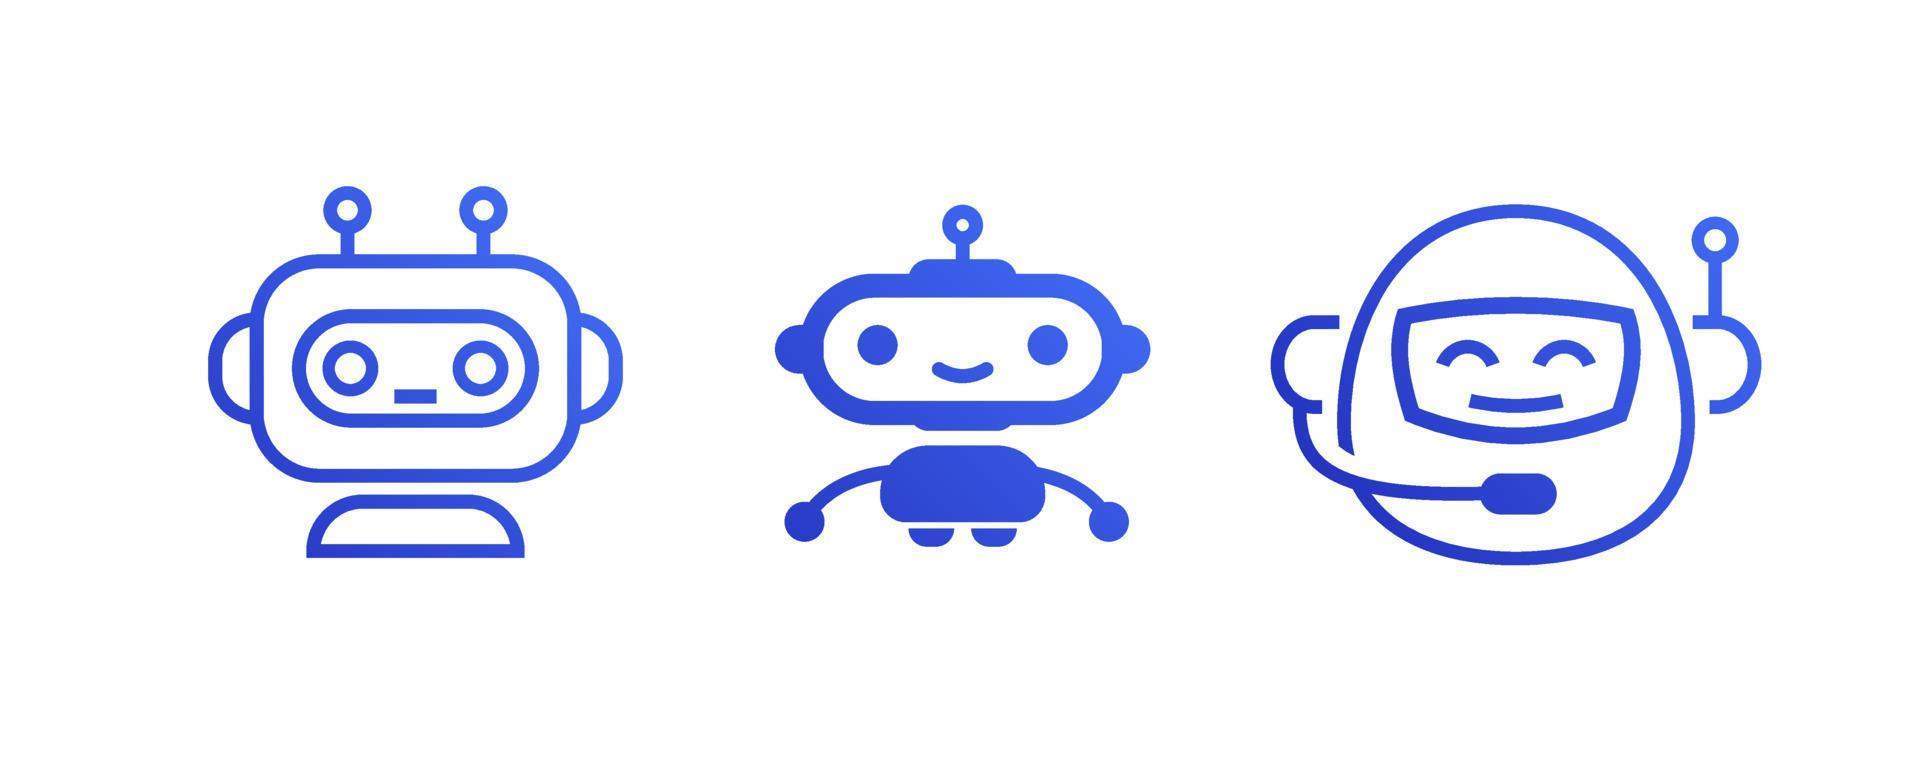 Chat bot icon, robot symbol vector set